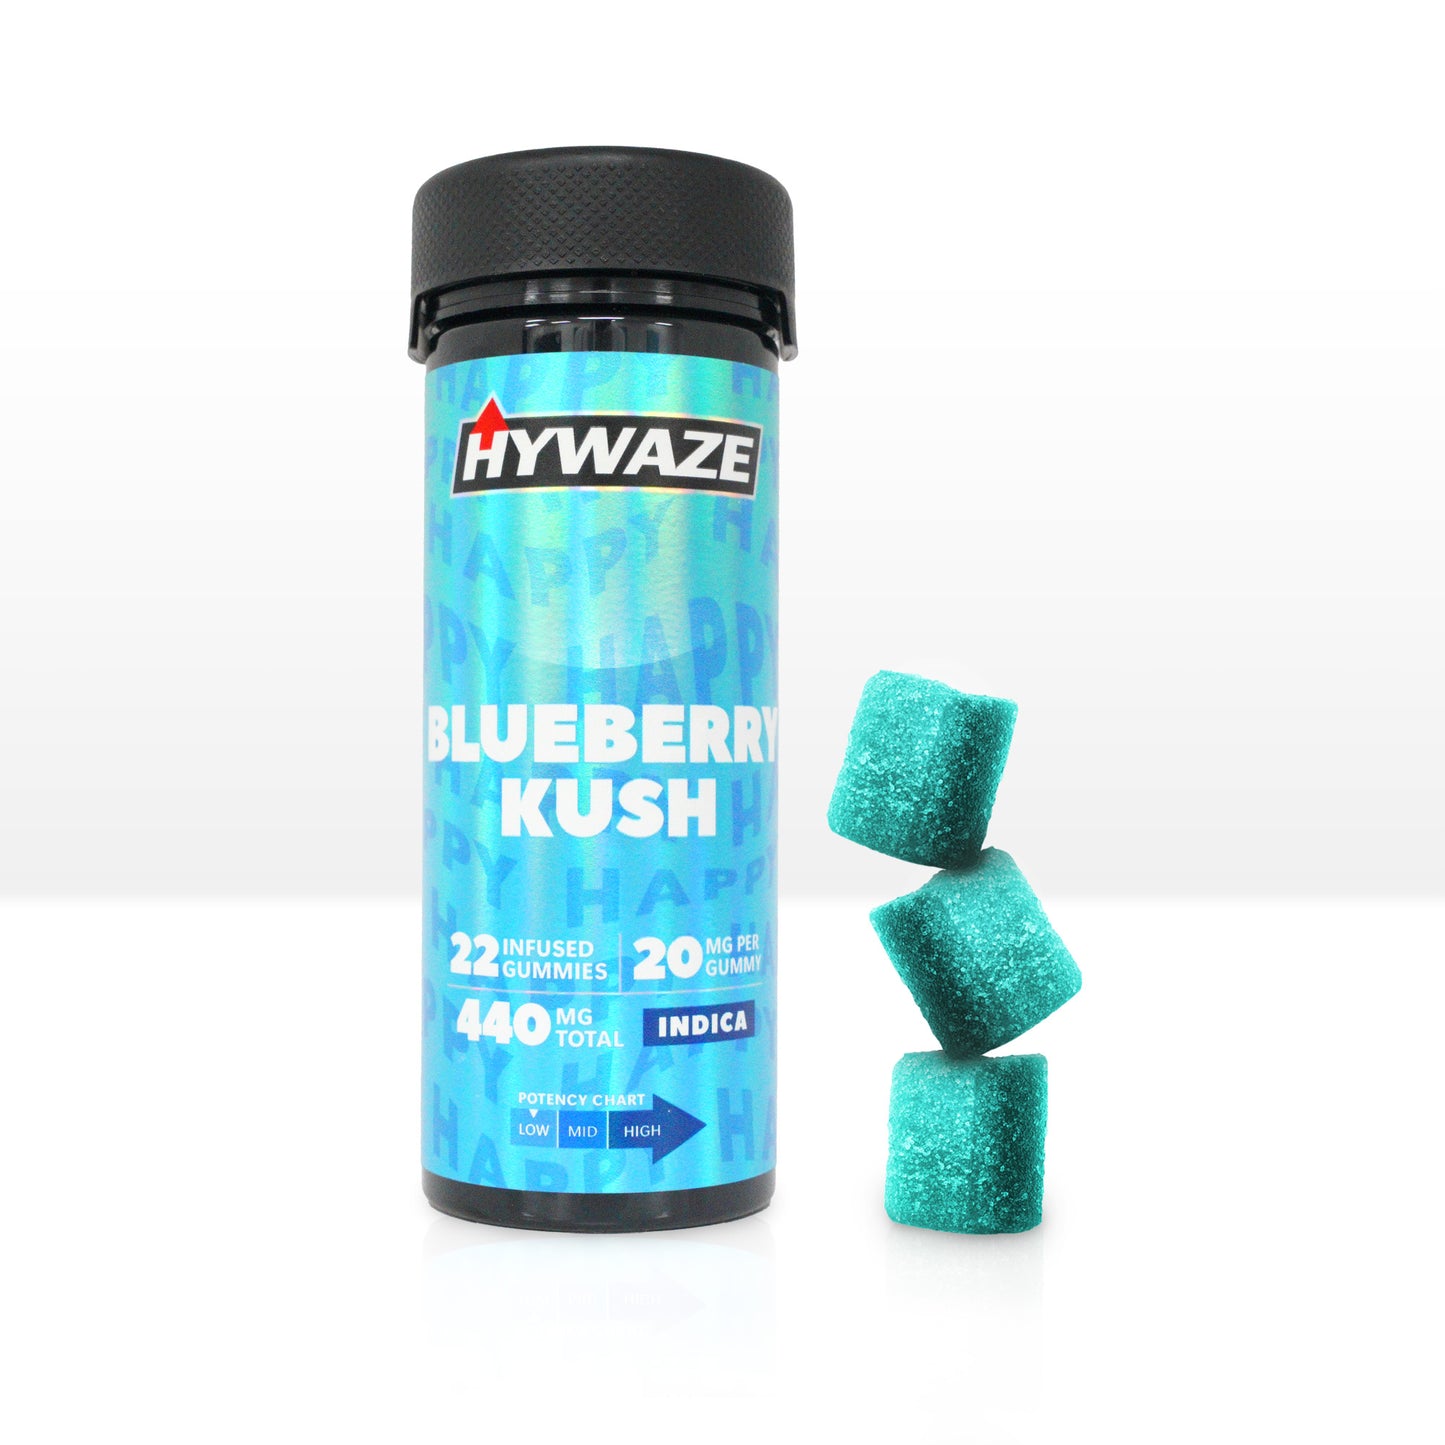 HYWAZE Premium Gummies Delta-9 THC Fruit Flavors (NEW PACKAGING)